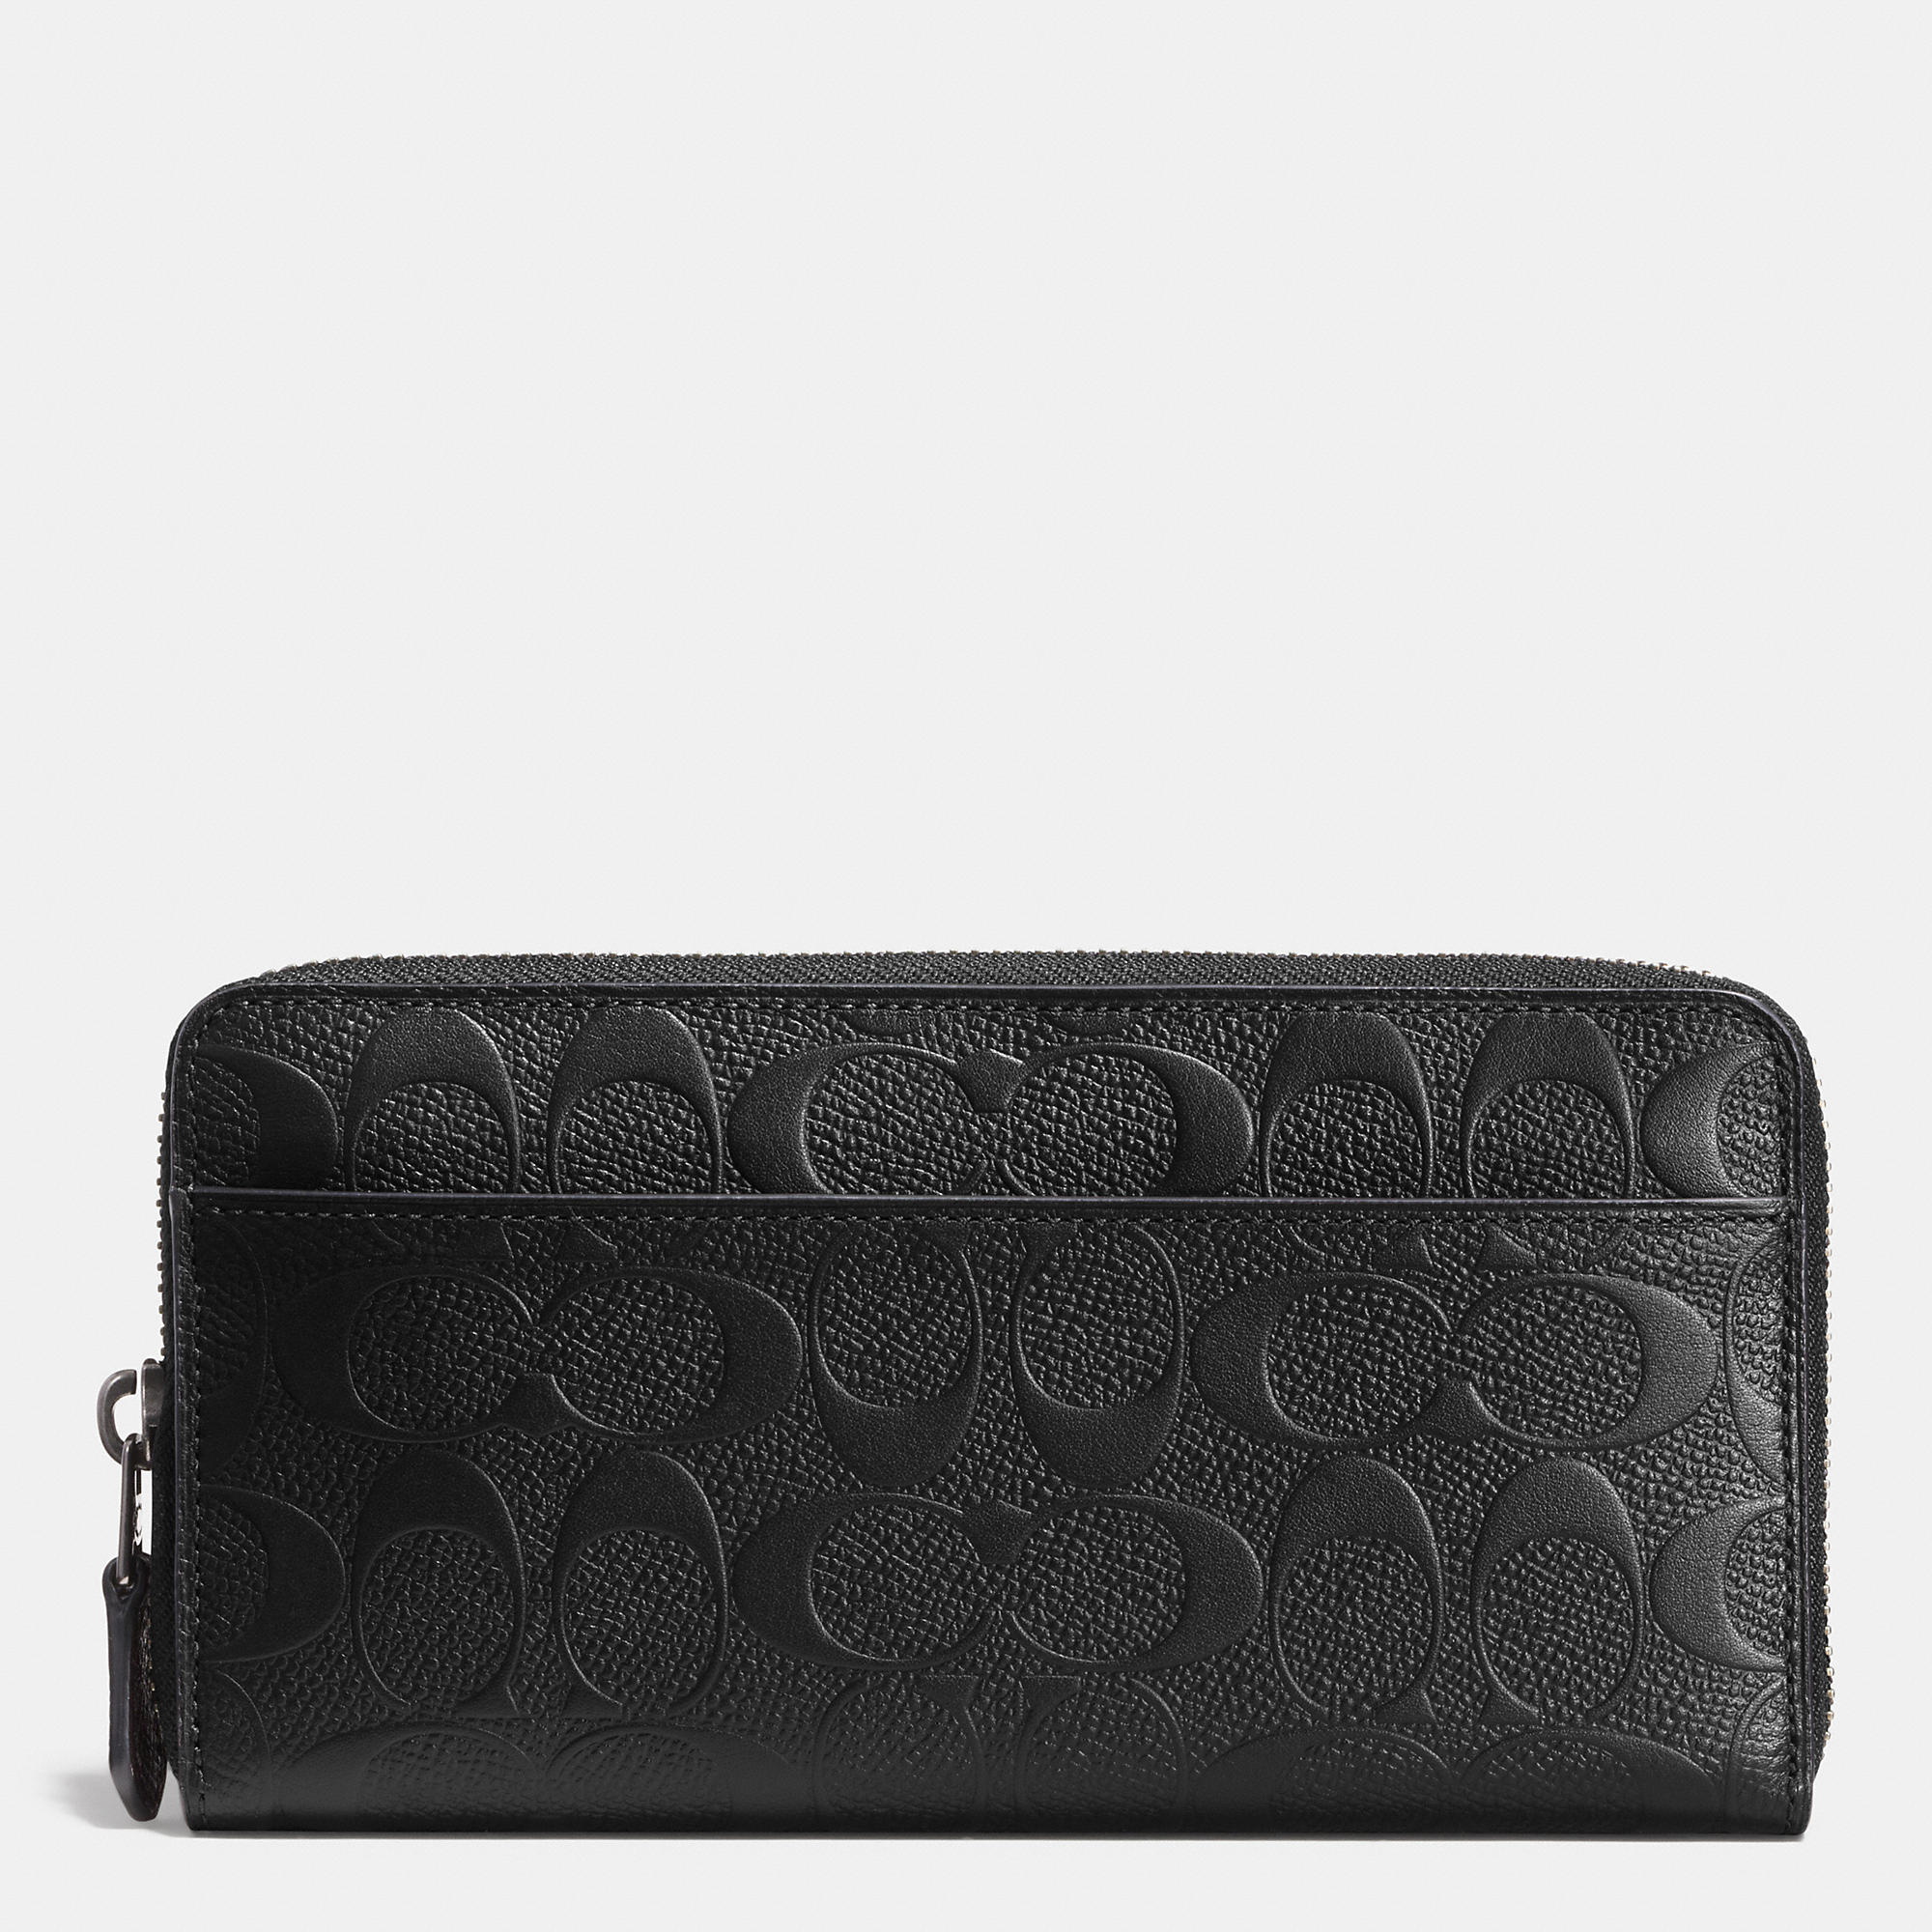 High Quality Handbags Coach Accordion Walletin Signature Crossgrain Leather